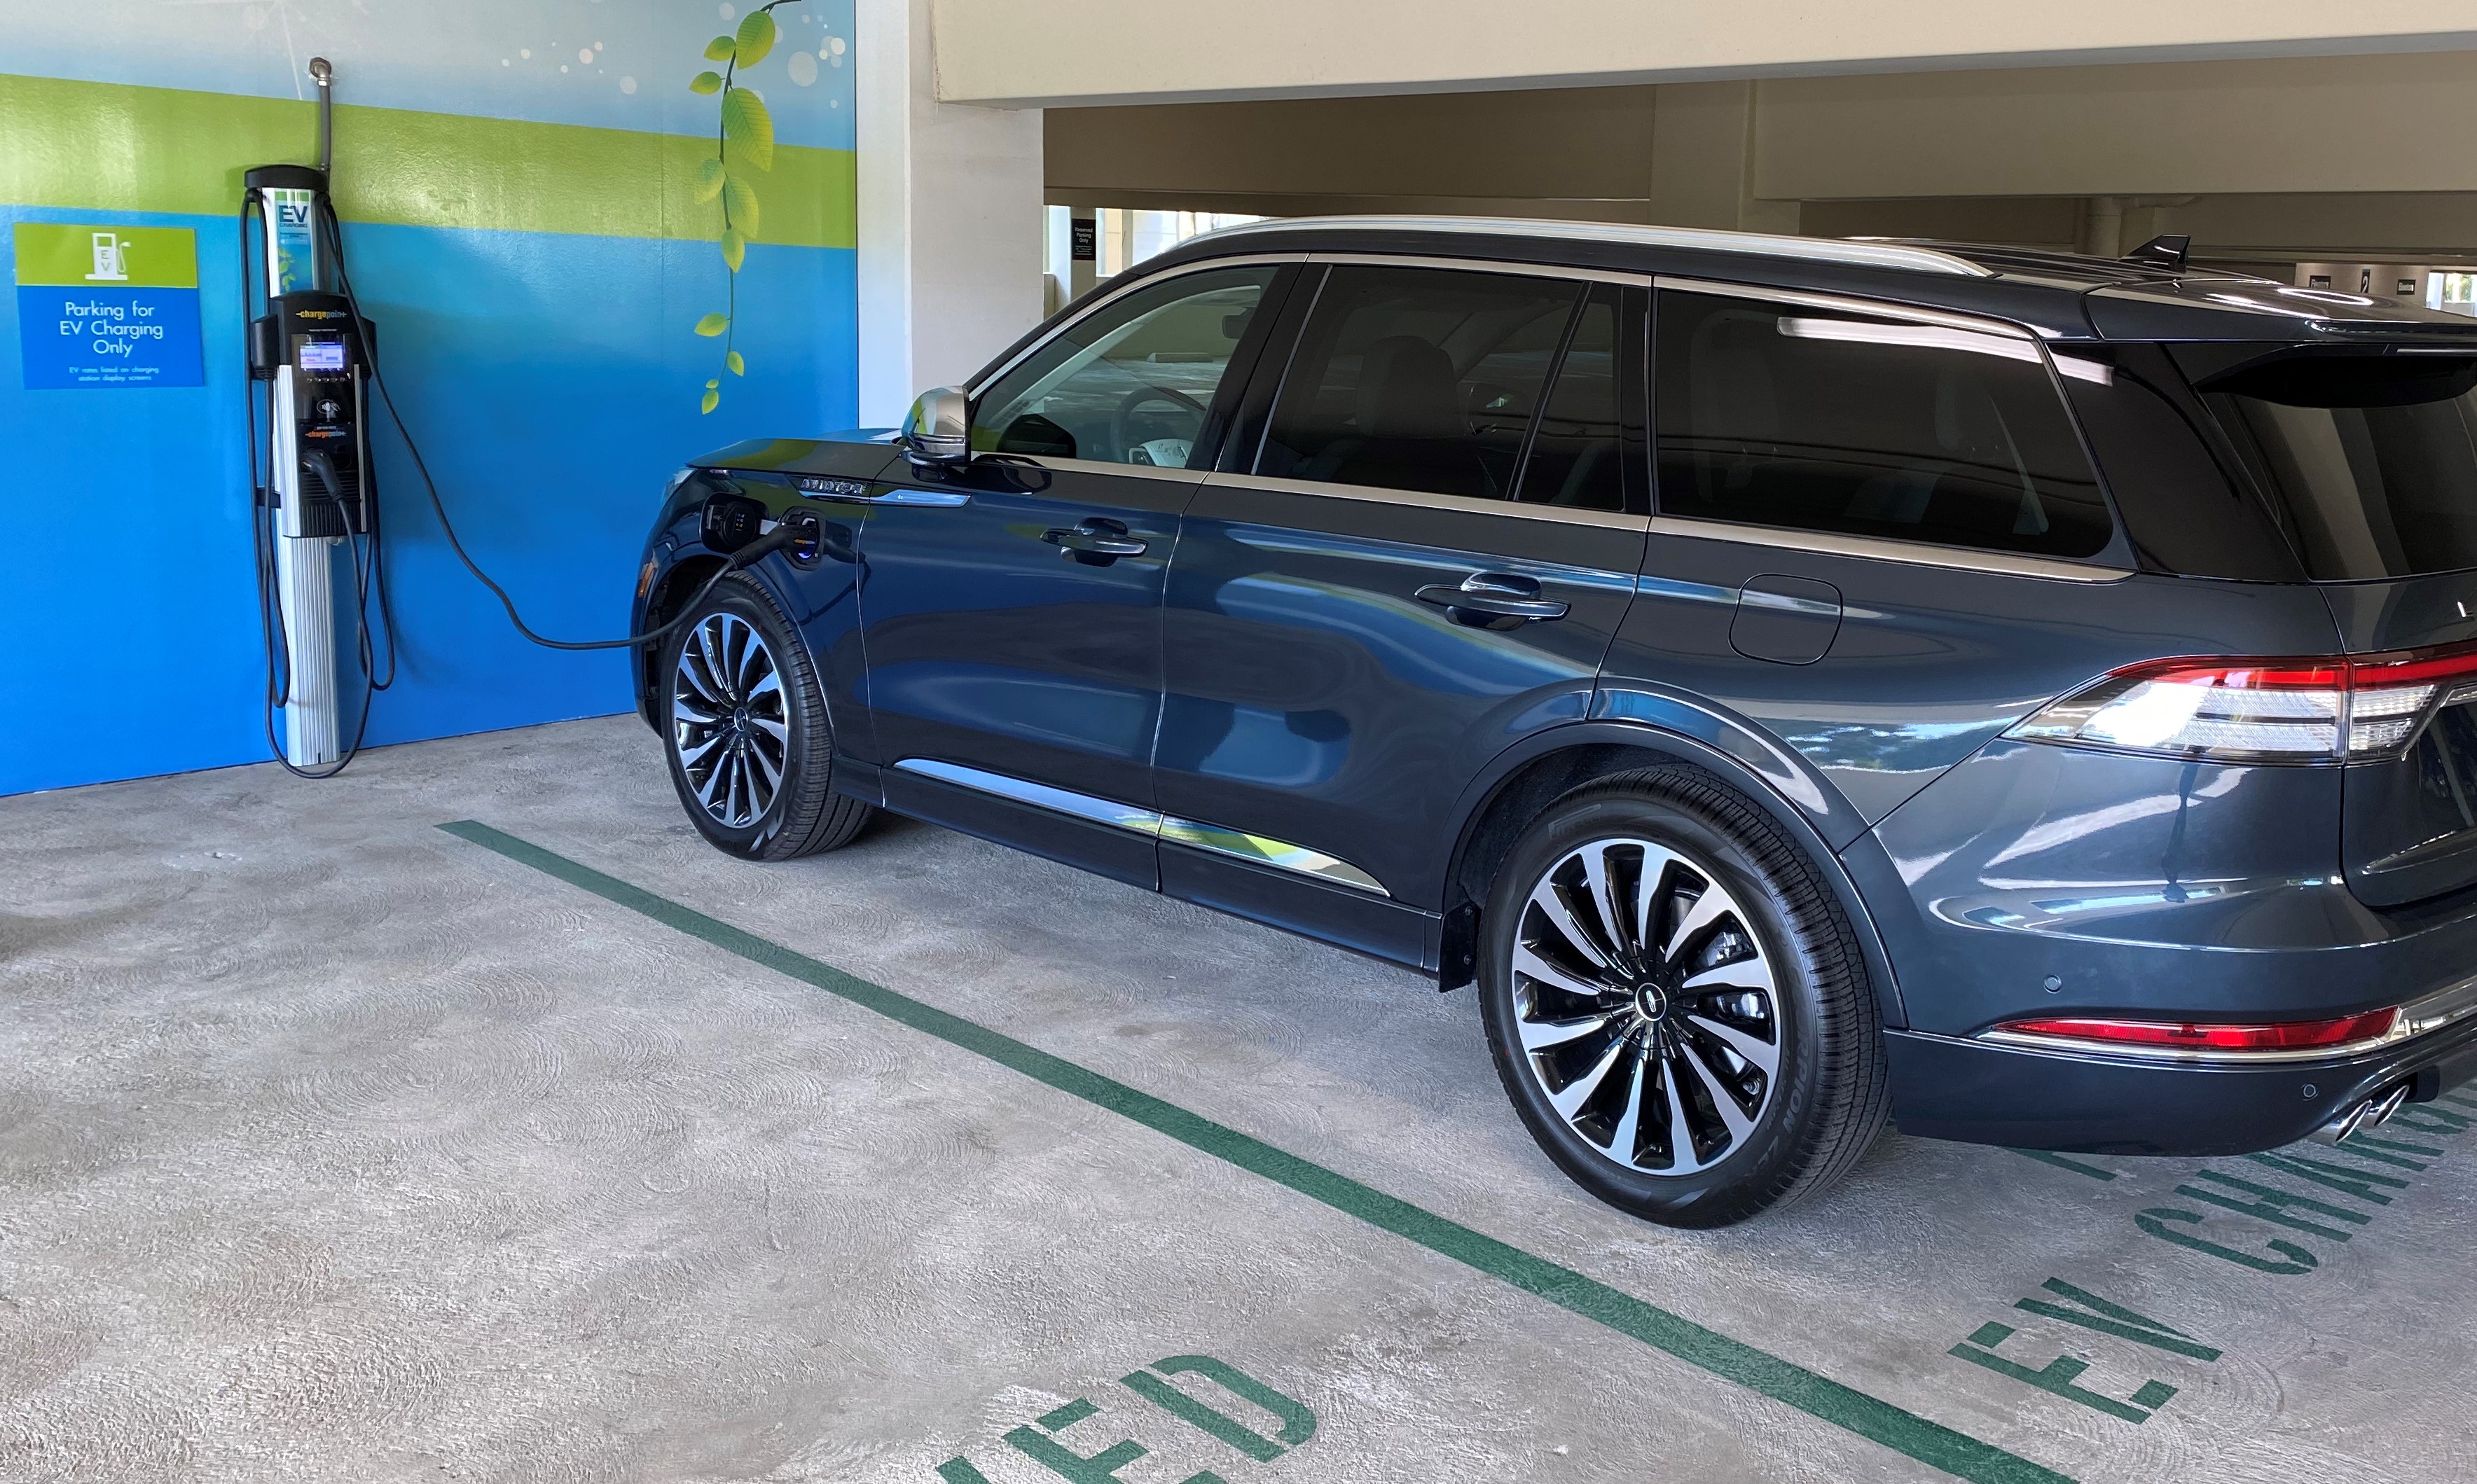 Charging Hybrid SUV in Office Parking Garage